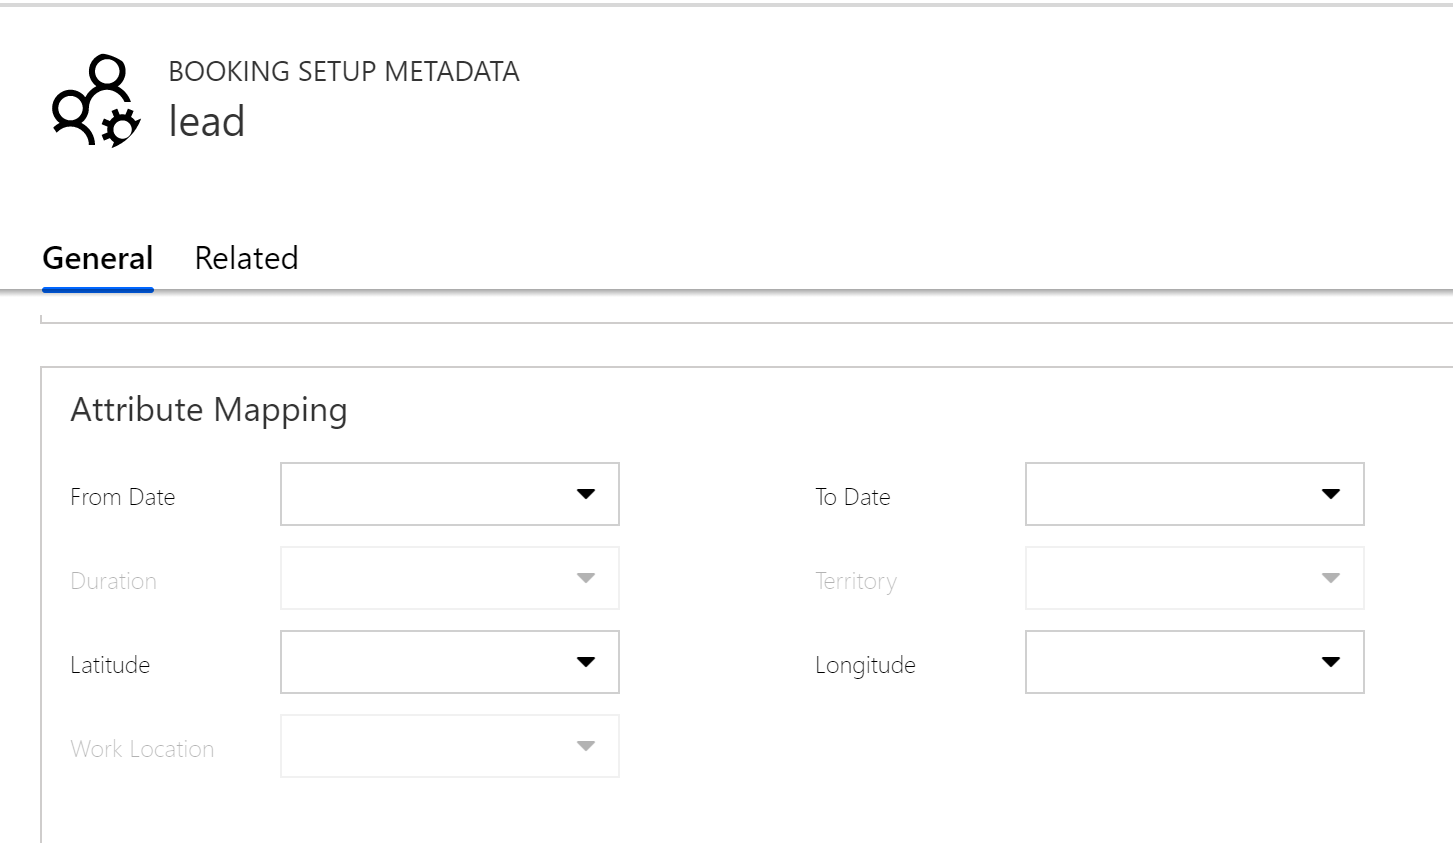 Screenshot of the booking setup metadata settings for the lead entity.